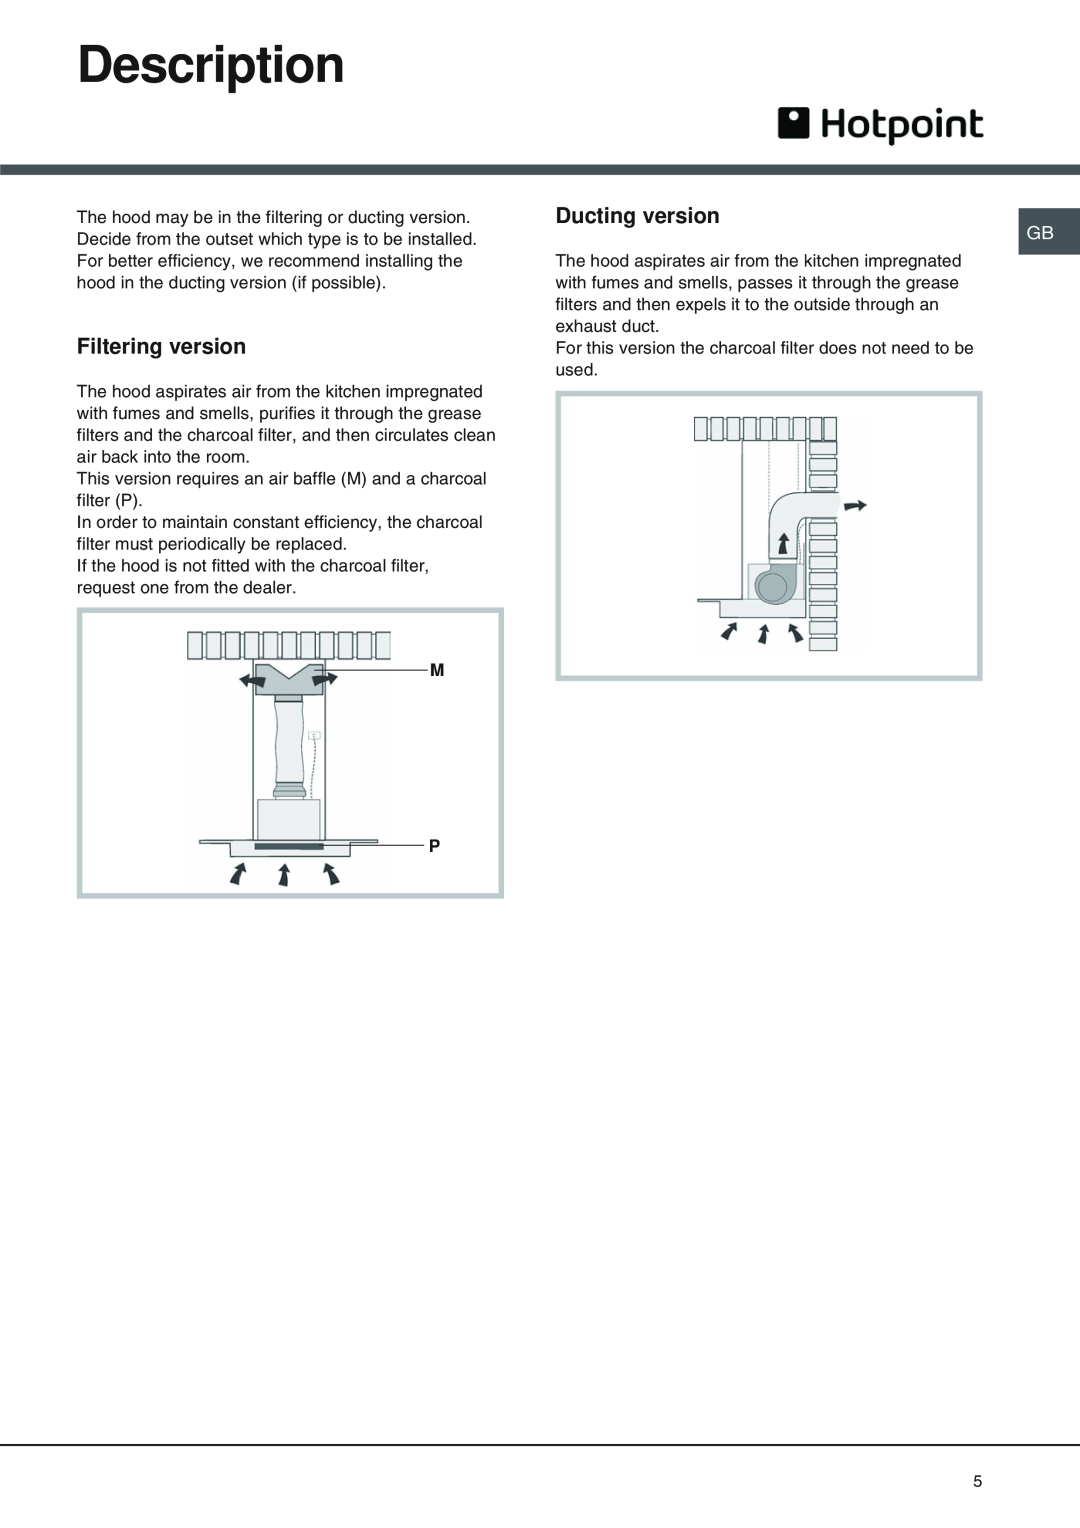 Hotpoint HD 93 X manual Description, Filtering version, Ducting version 